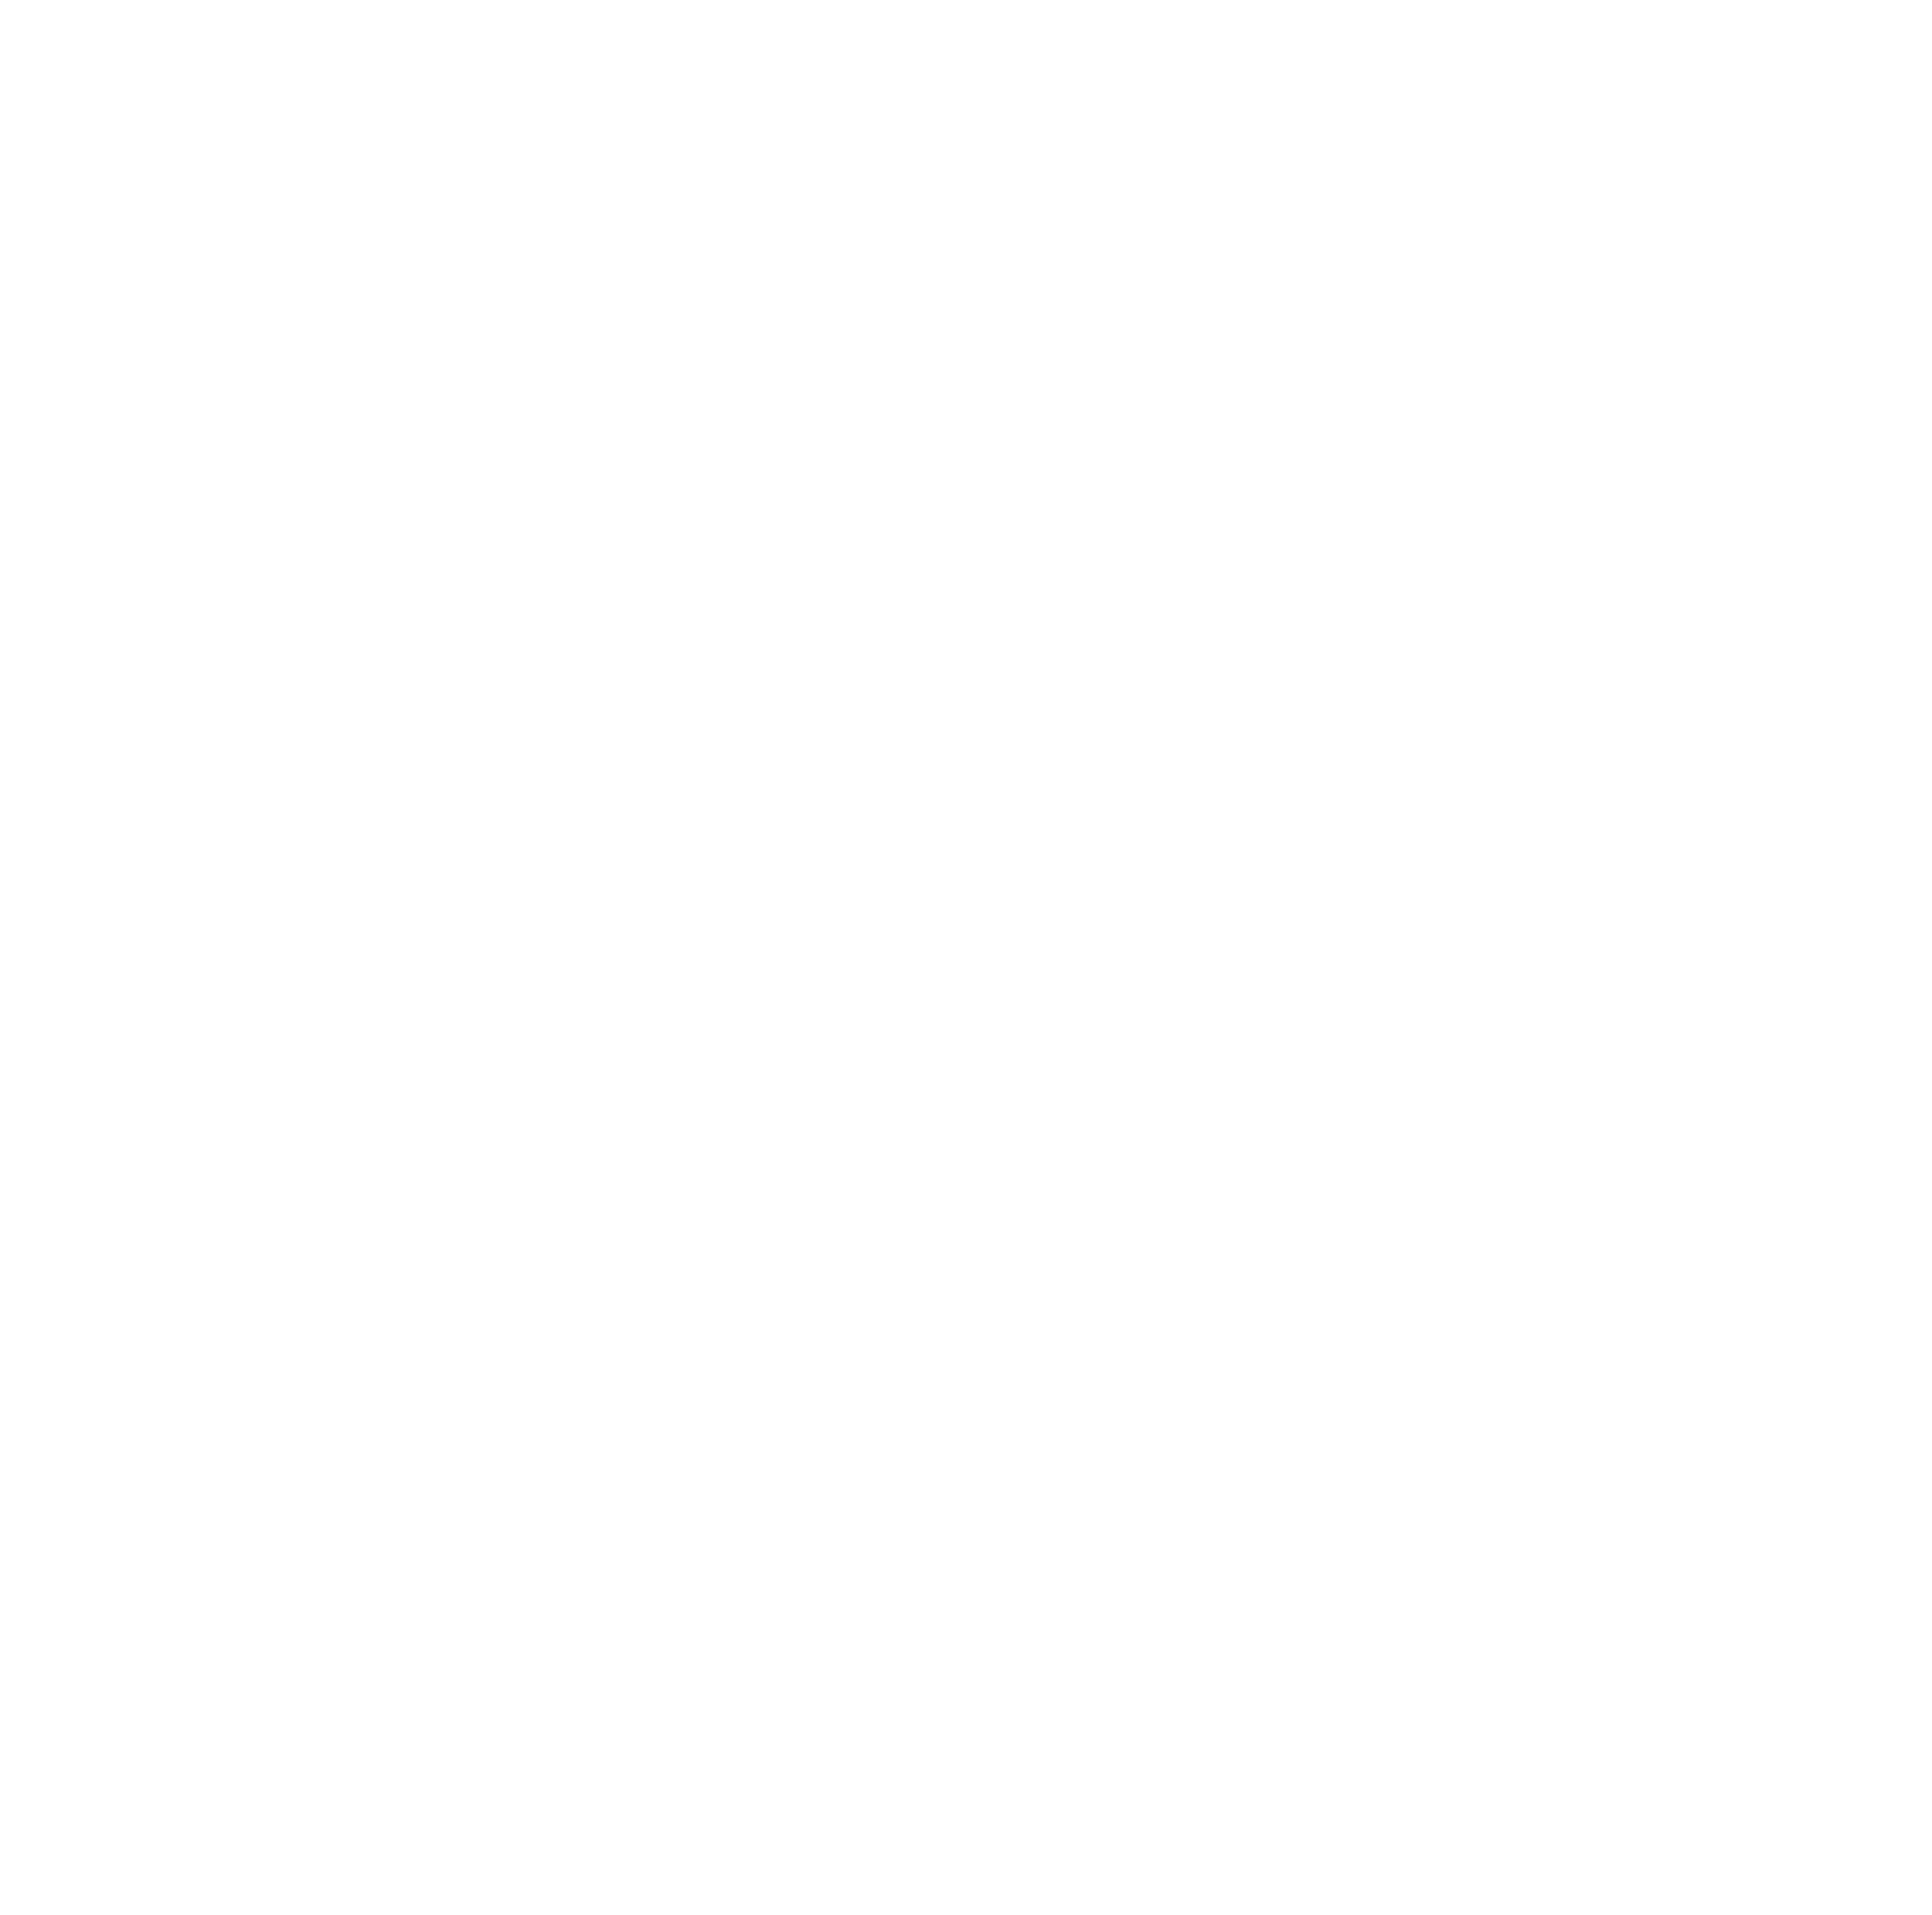 Coach professionnel O'Coaching